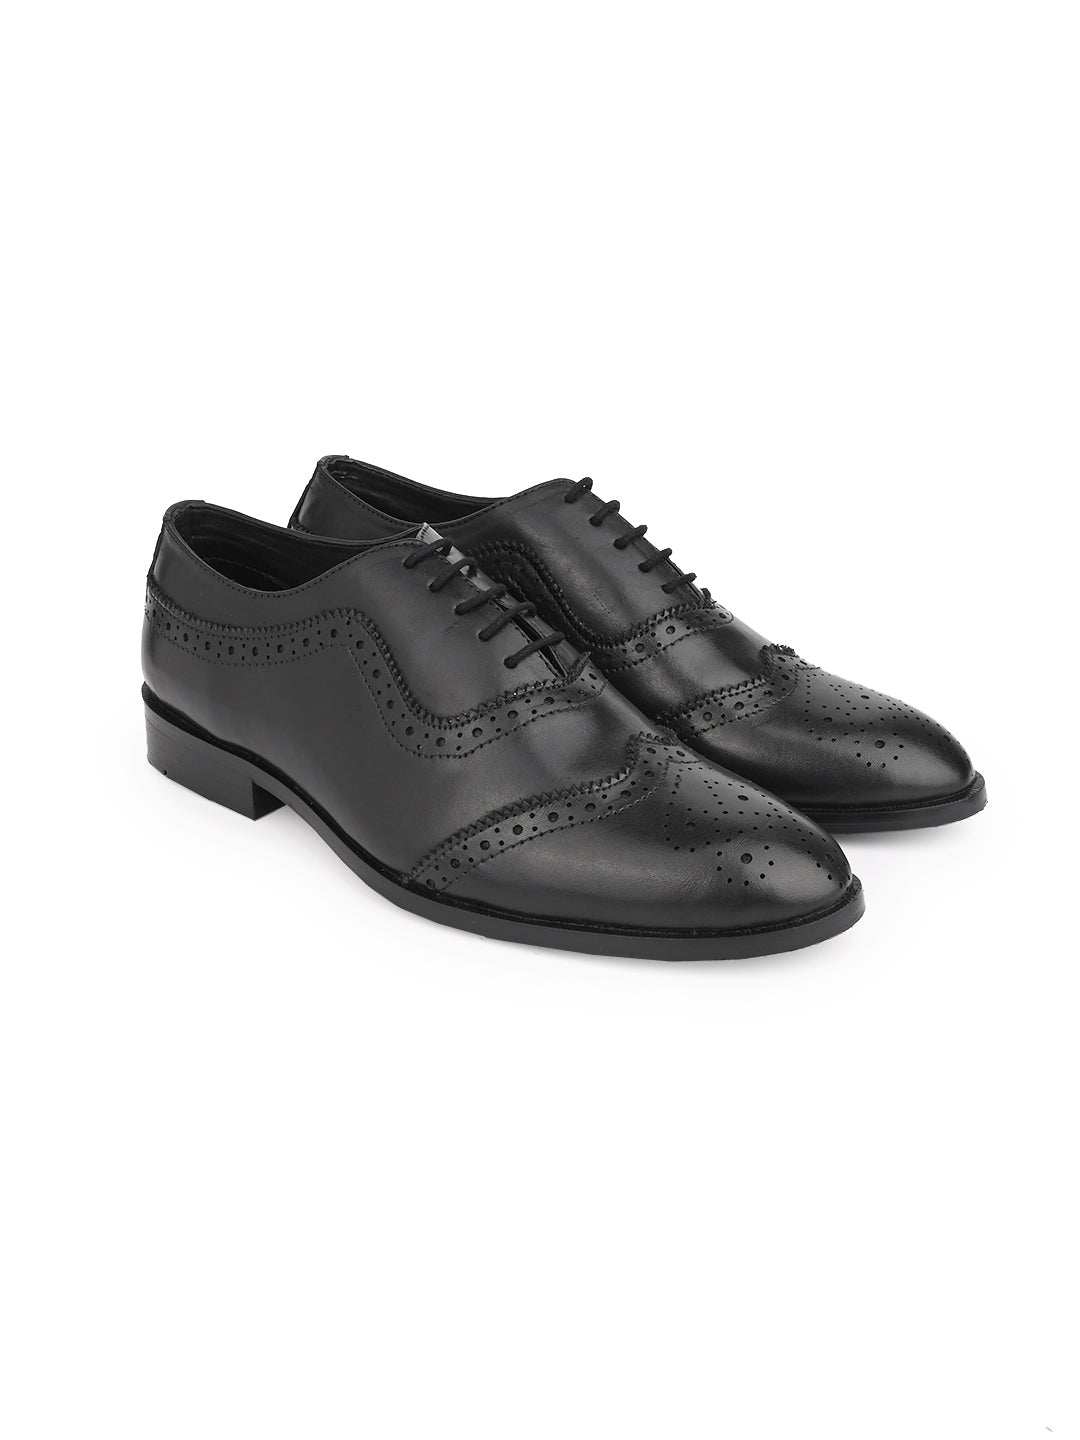 Men Black Solid Brogue Oxford Formal Shoes